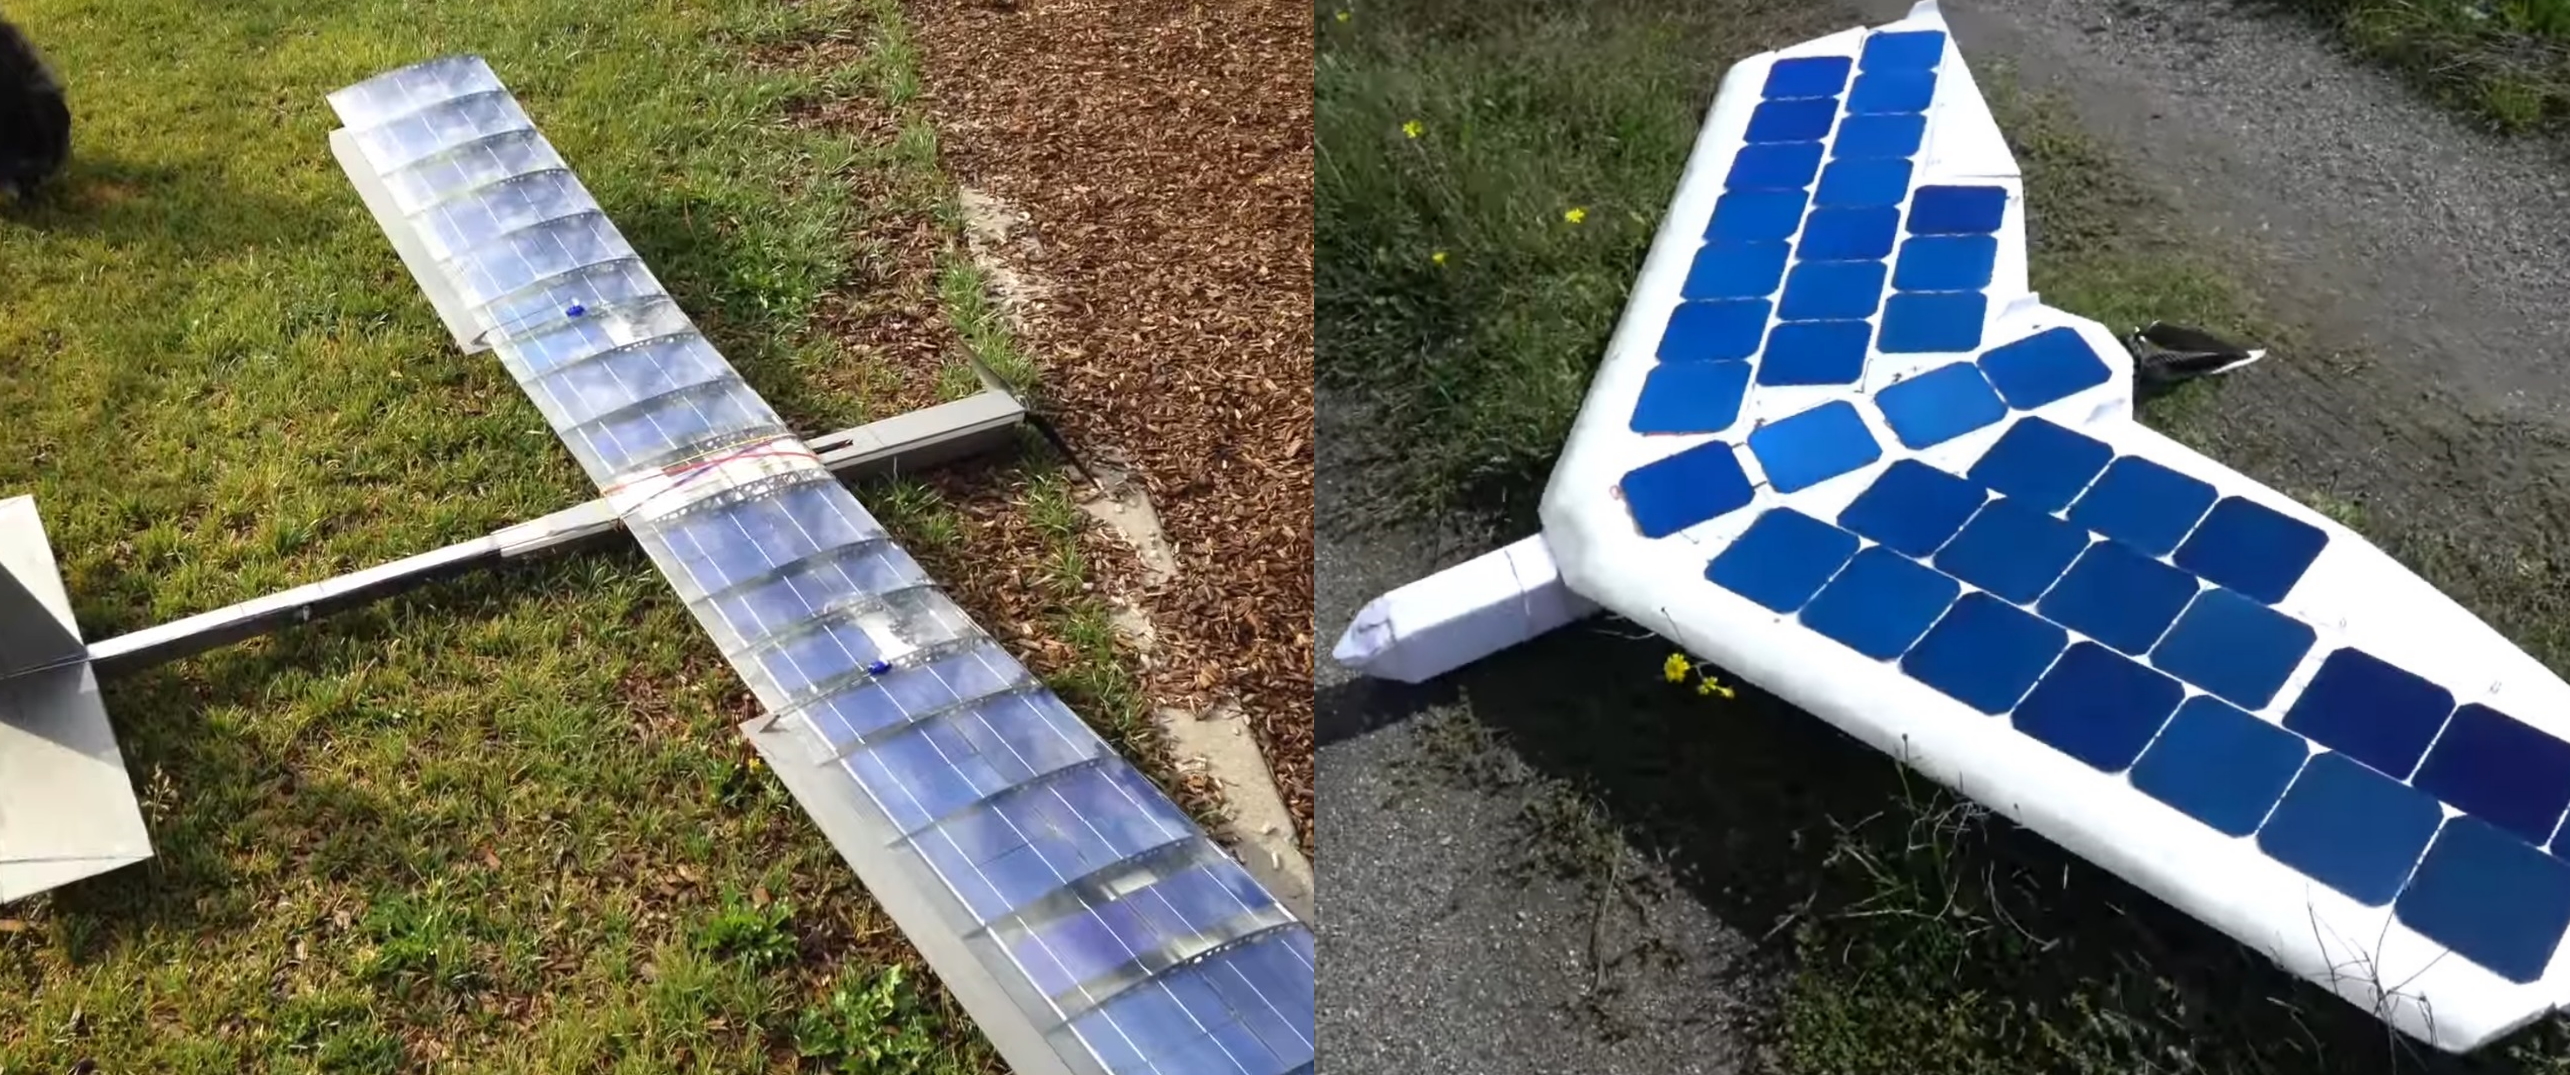 solar powered rc glider